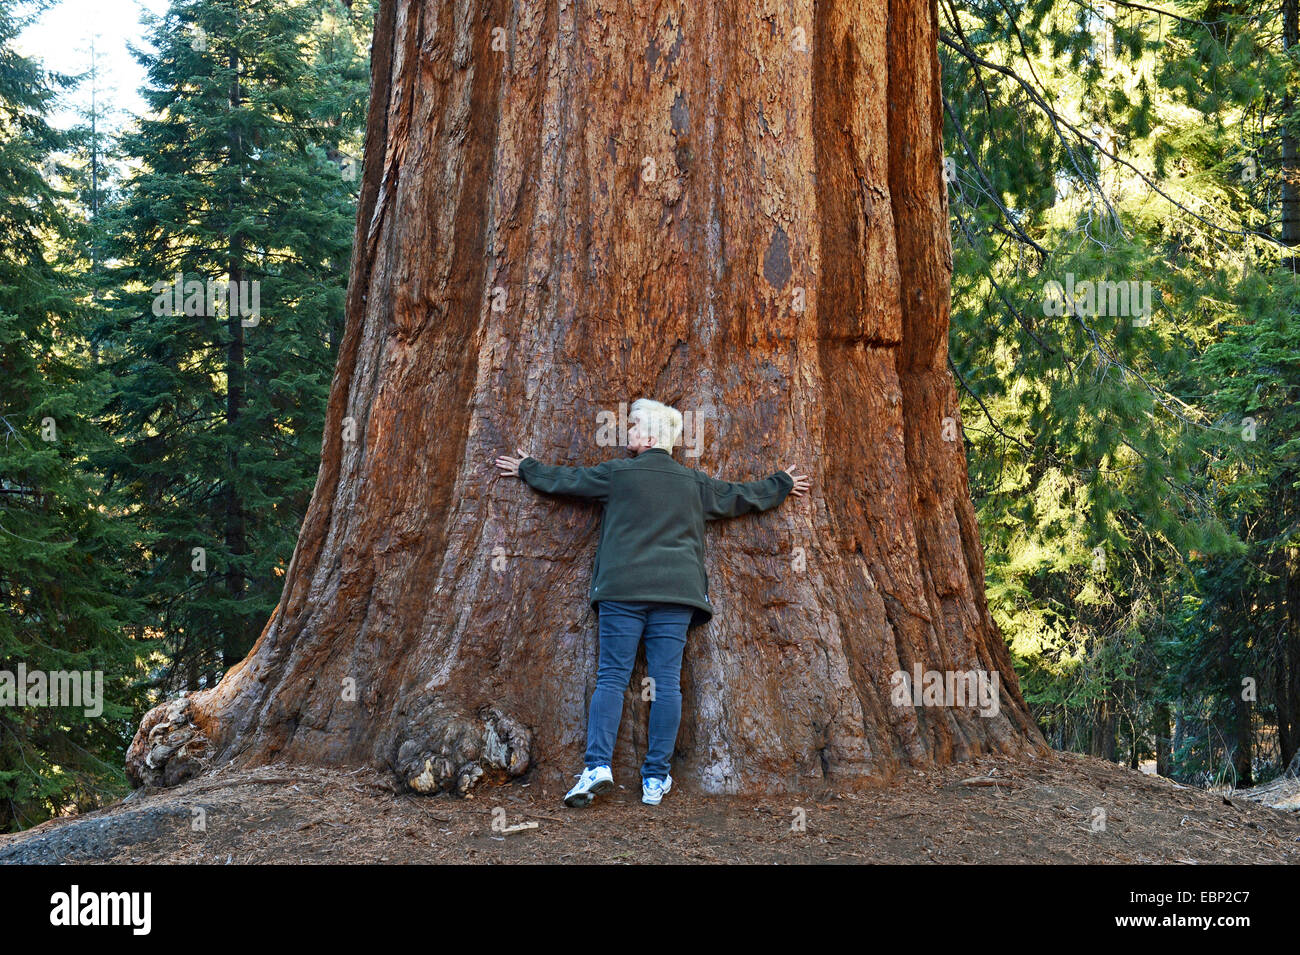 giant sequoia, giant redwood (Sequoiadendron giganteum), woman spanning the trunk of a giant sequoia, proportion, USA, California, Sequoia National Park Stock Photo